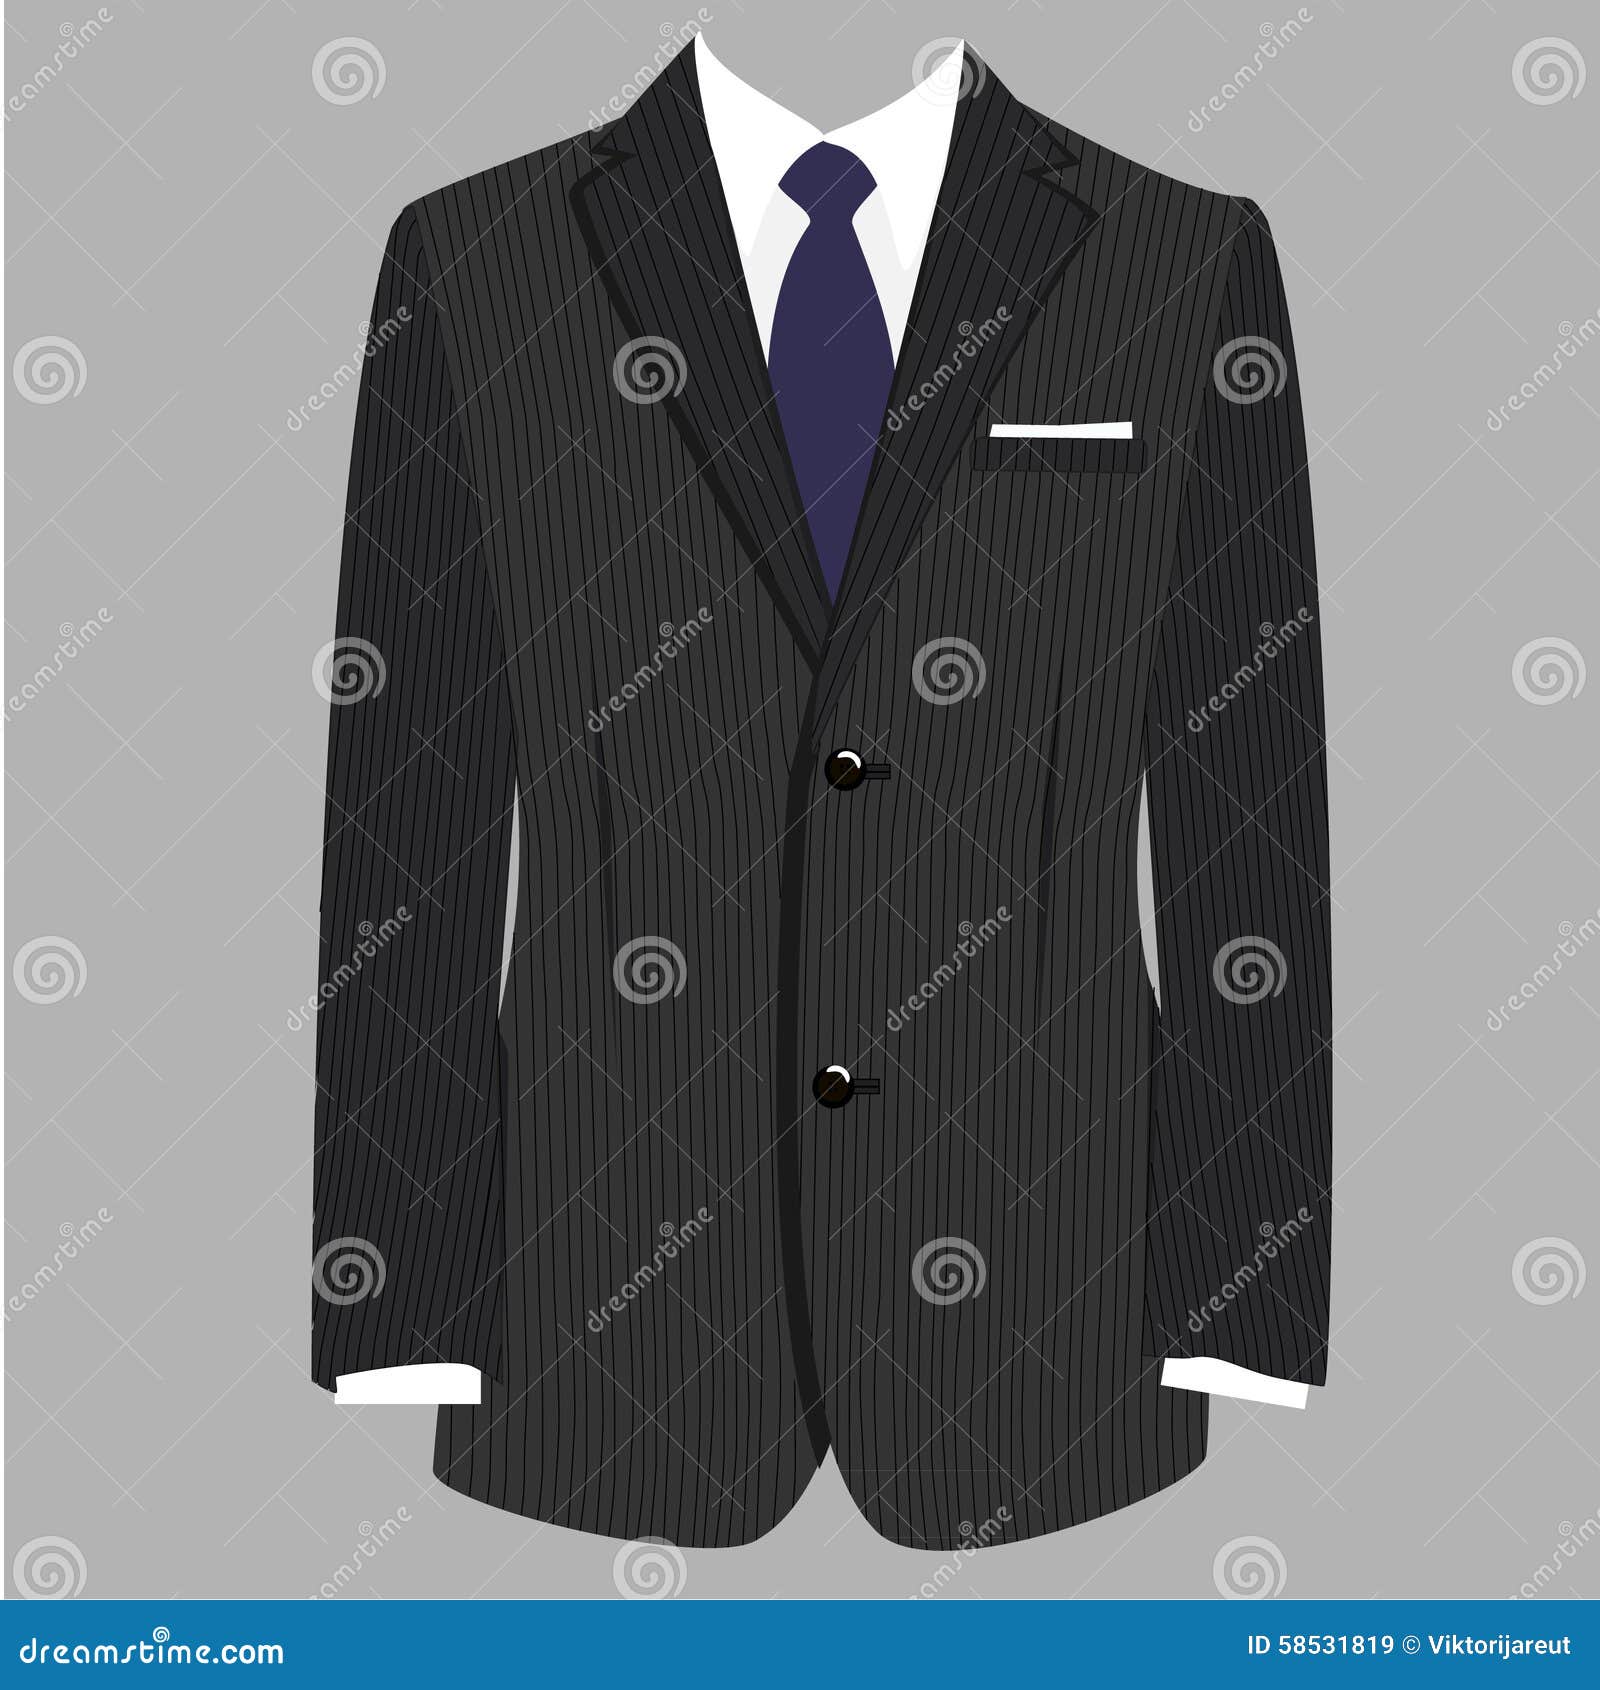 Suit stock illustration. Illustration of creative, necktie - 58531819